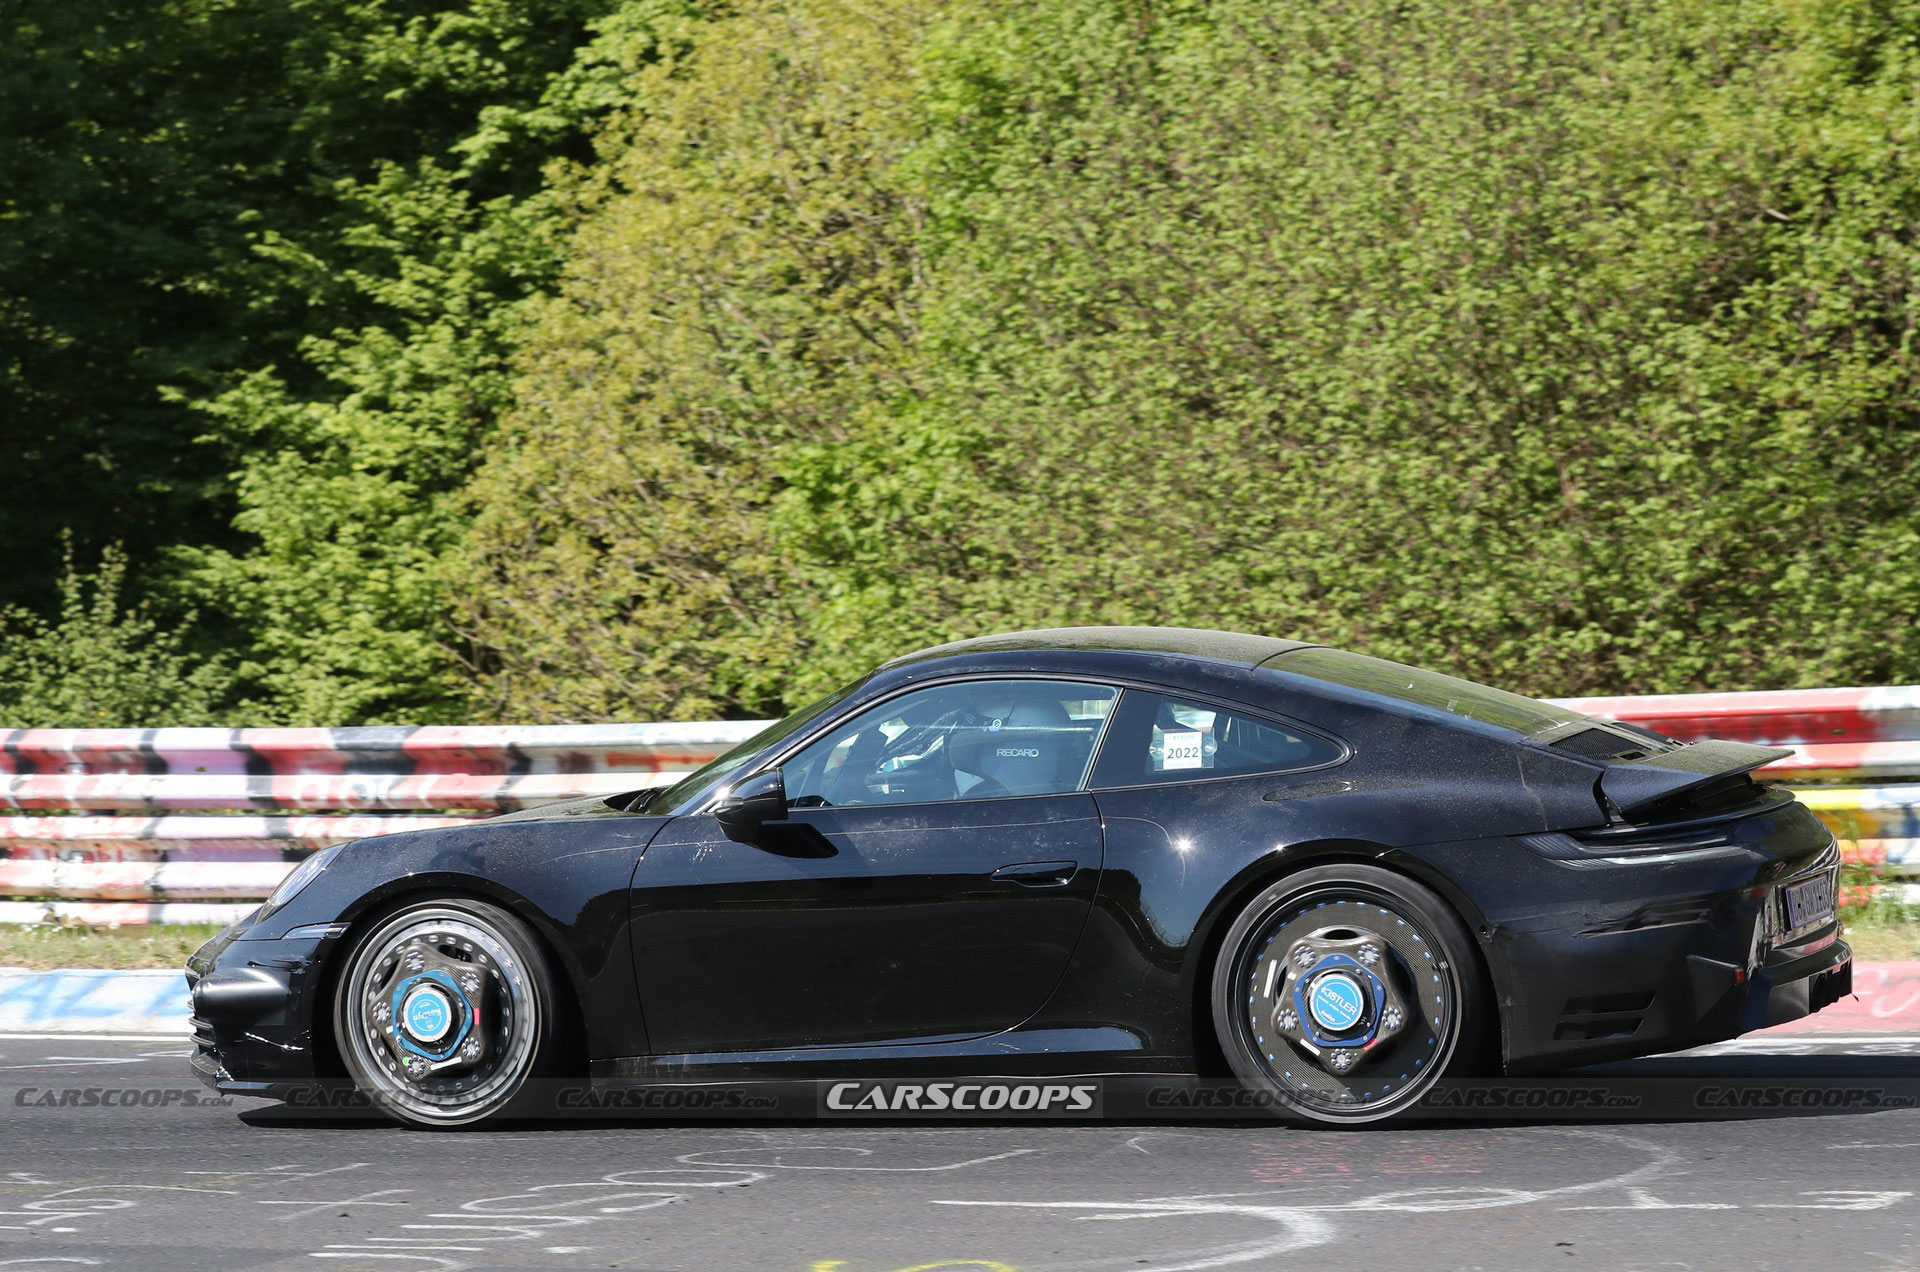 Nuevo Porsche 911